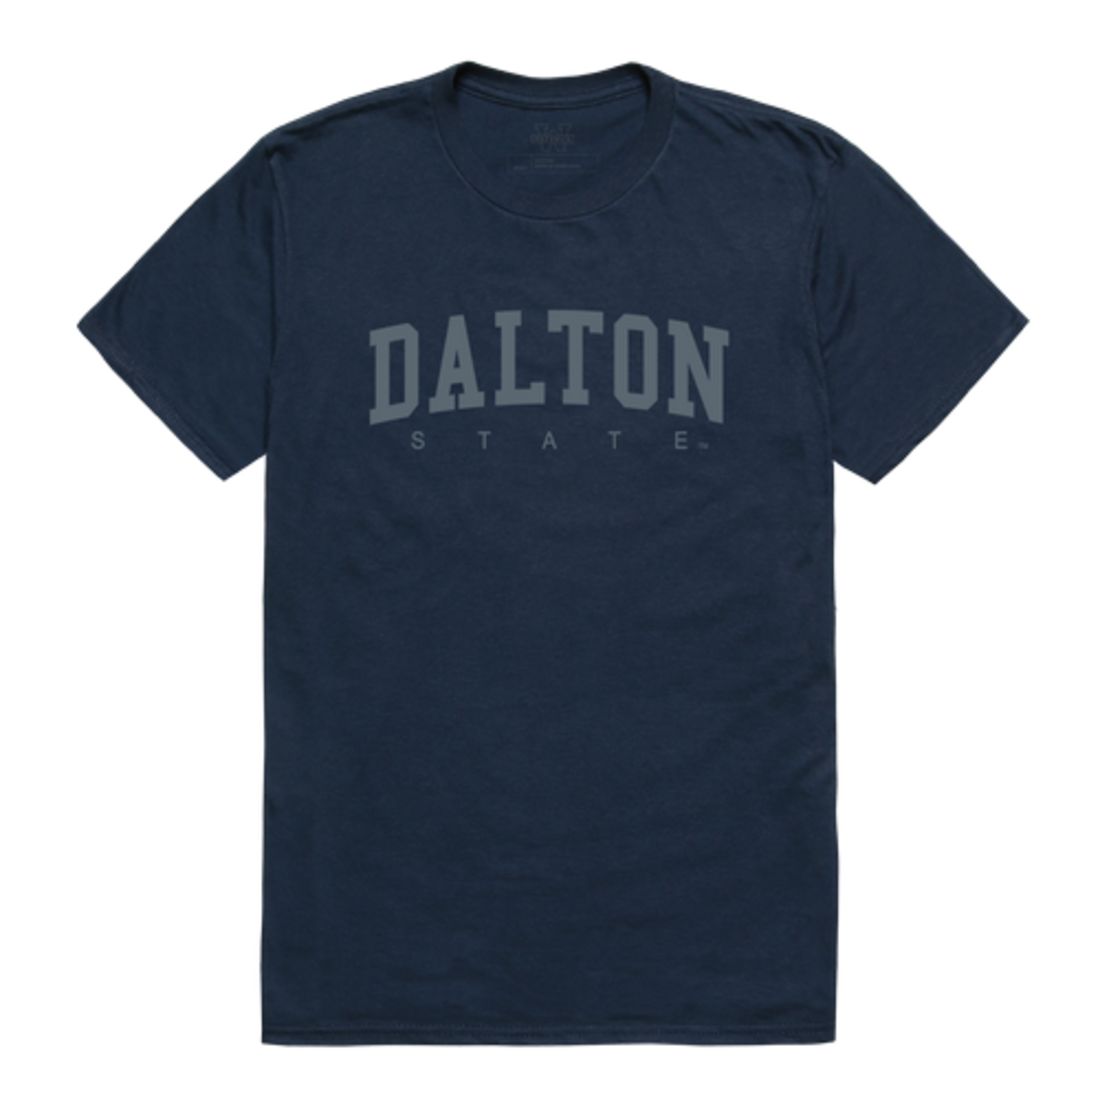 Dalton State College Roadrunners Collegiate T-Shirt Tee